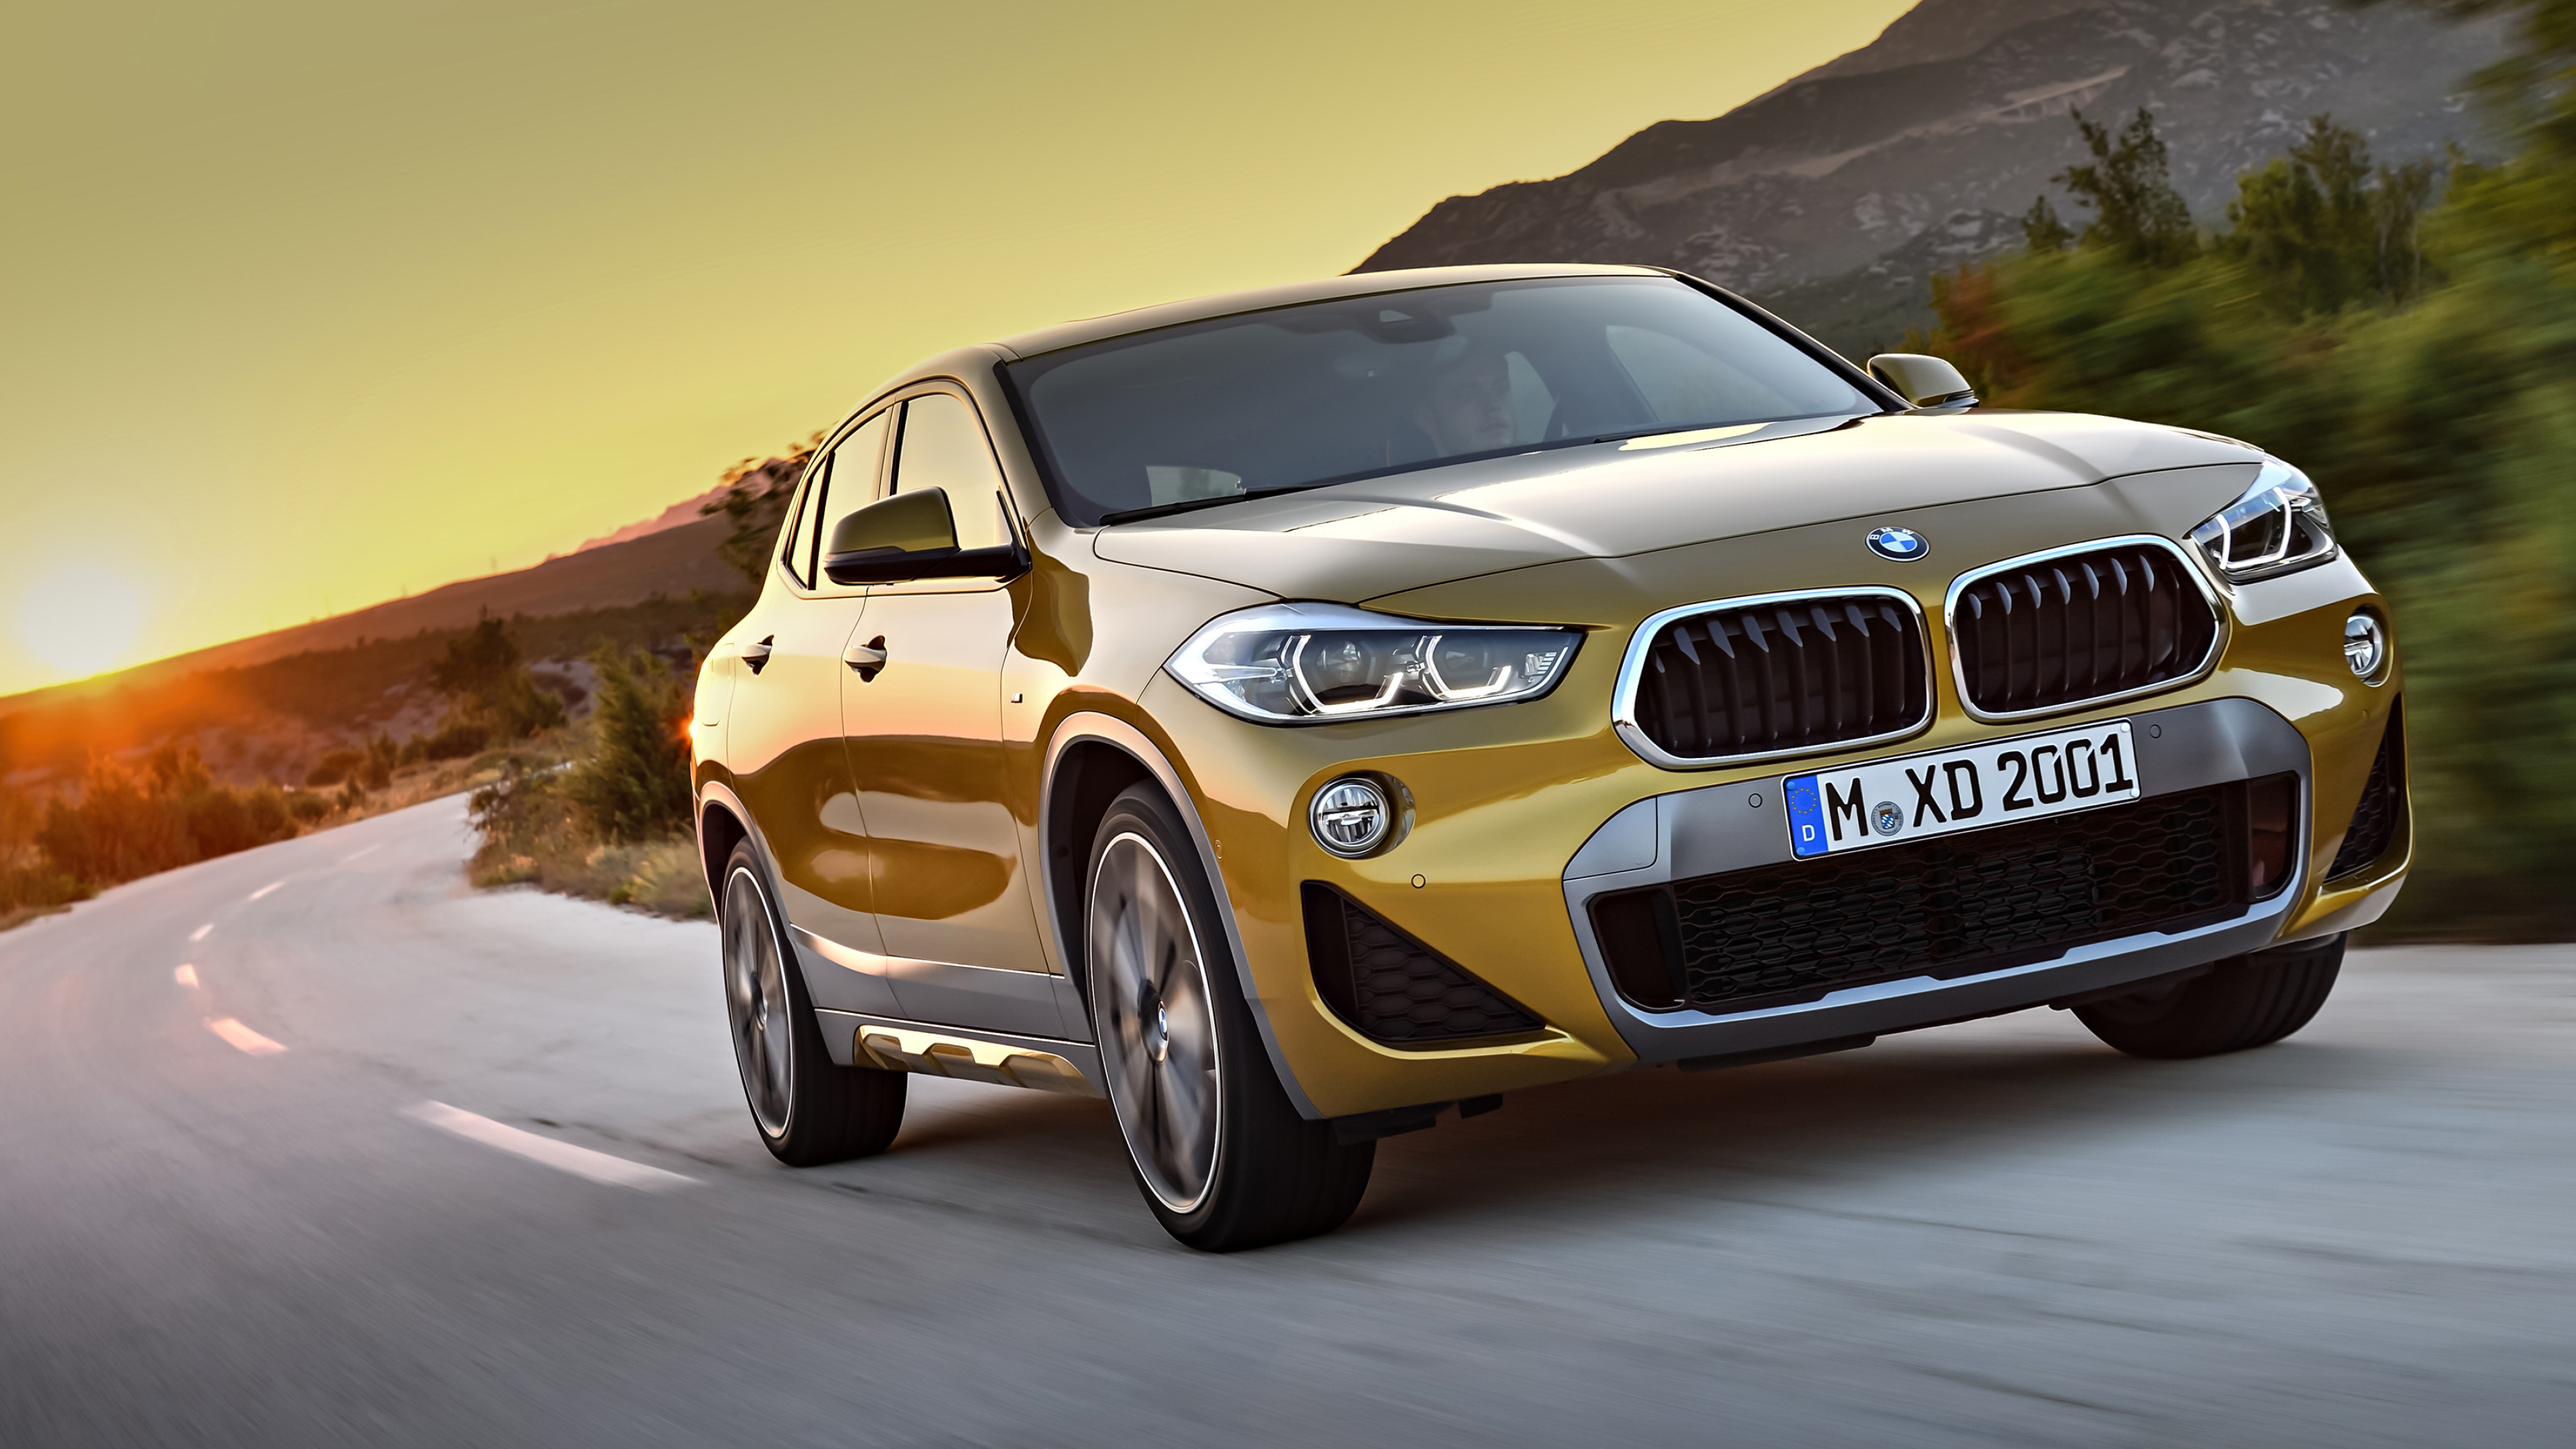 BMW X2, Cars desktop wallpapers, 4K Ultra HD, Unforgettable design, 3840x2160 4K Desktop